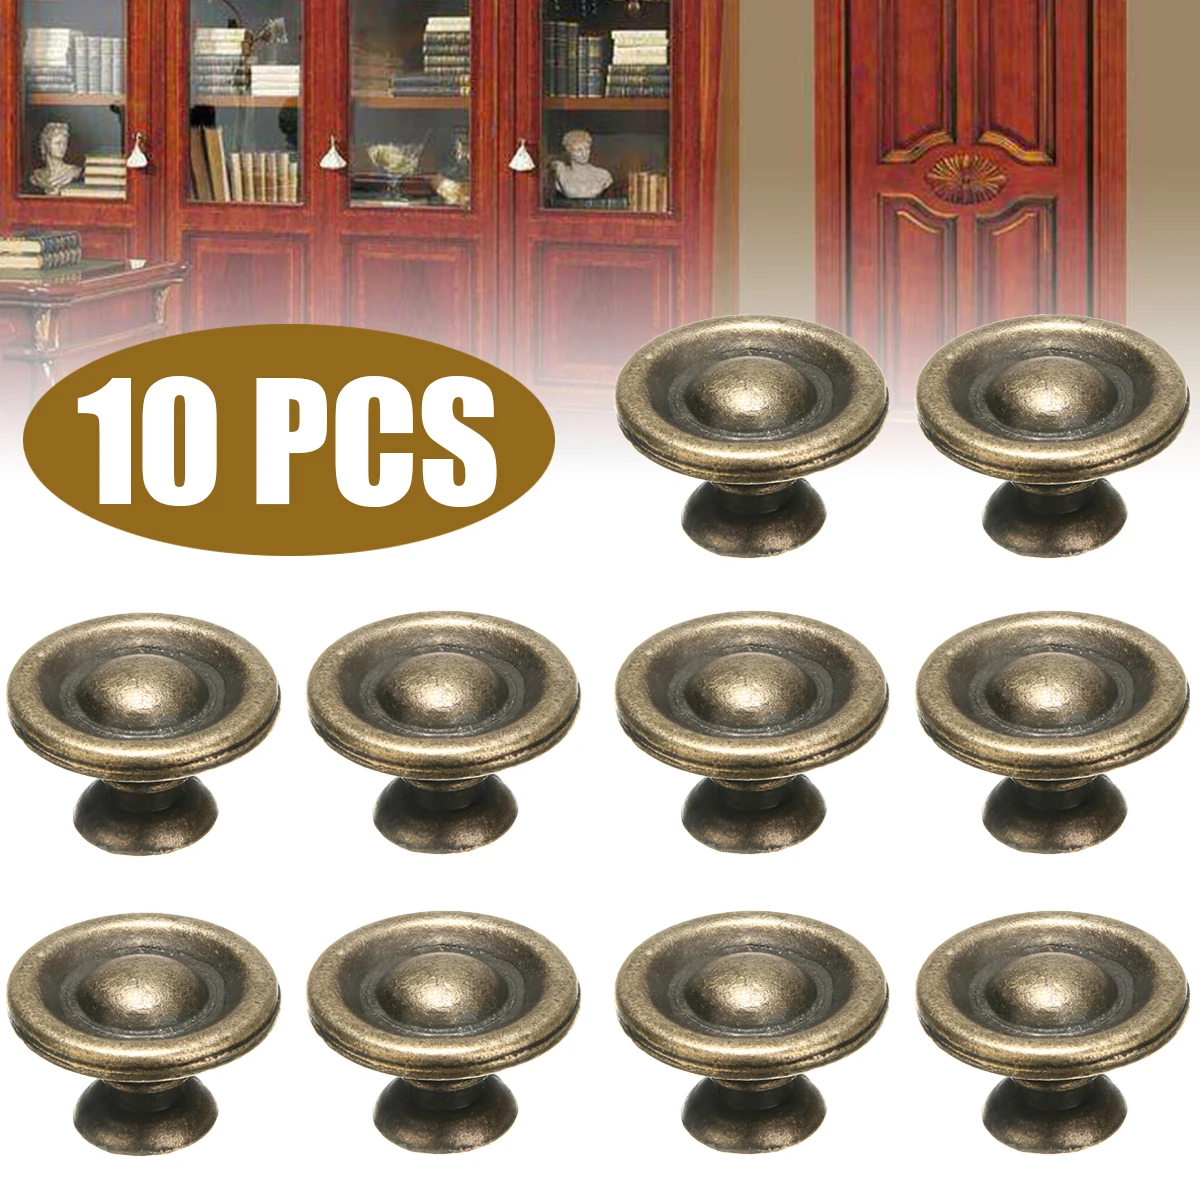 10pcs Antique Brass Furniture Knobs Handles Kitchen Bedroom Doors Cabinet Drawers Cabinet Hardware Knobs